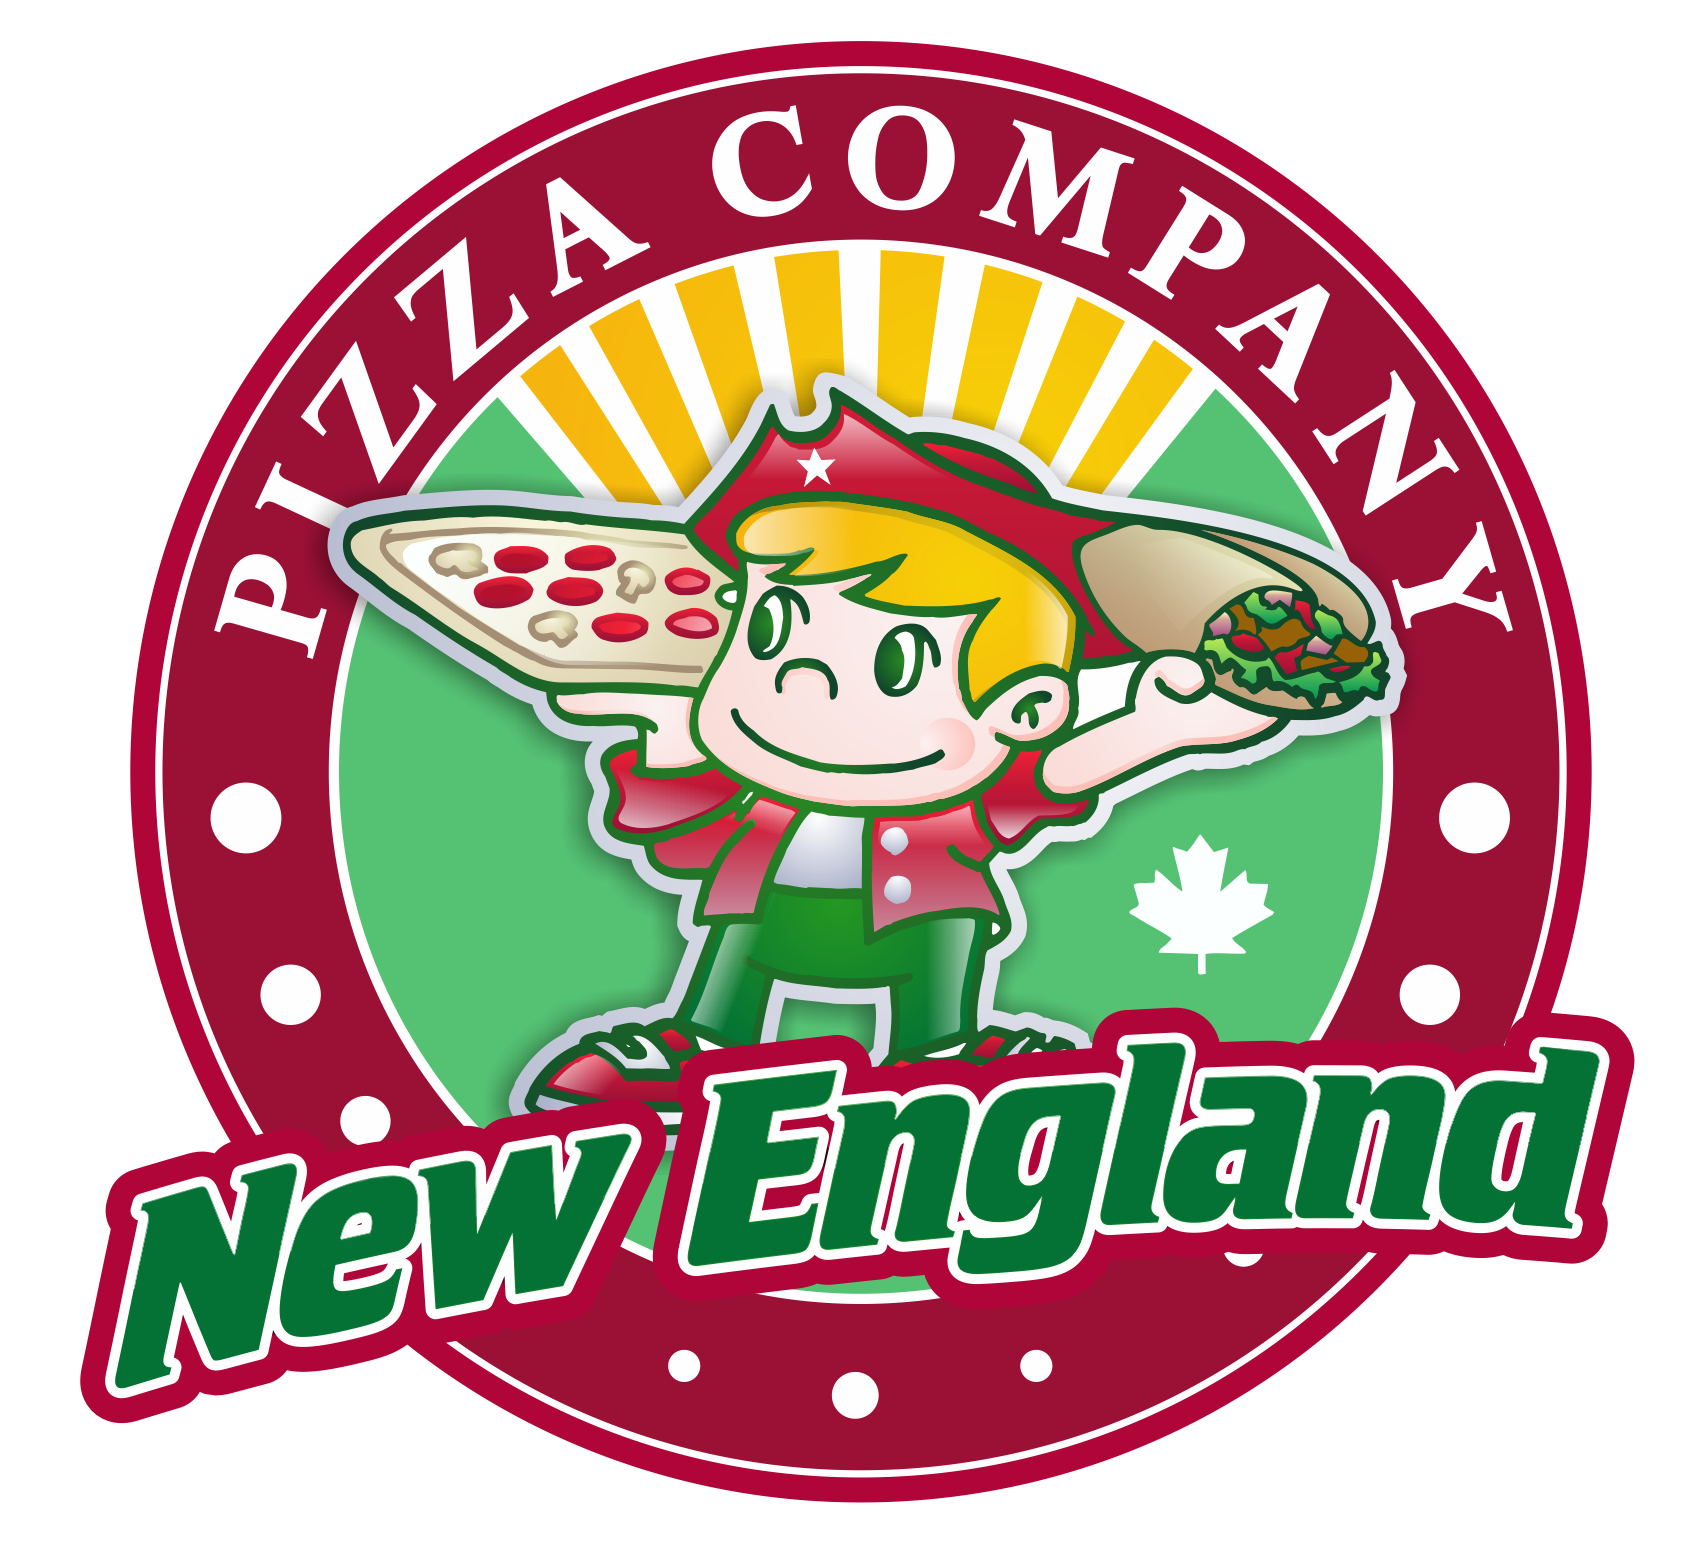 New England Pizza